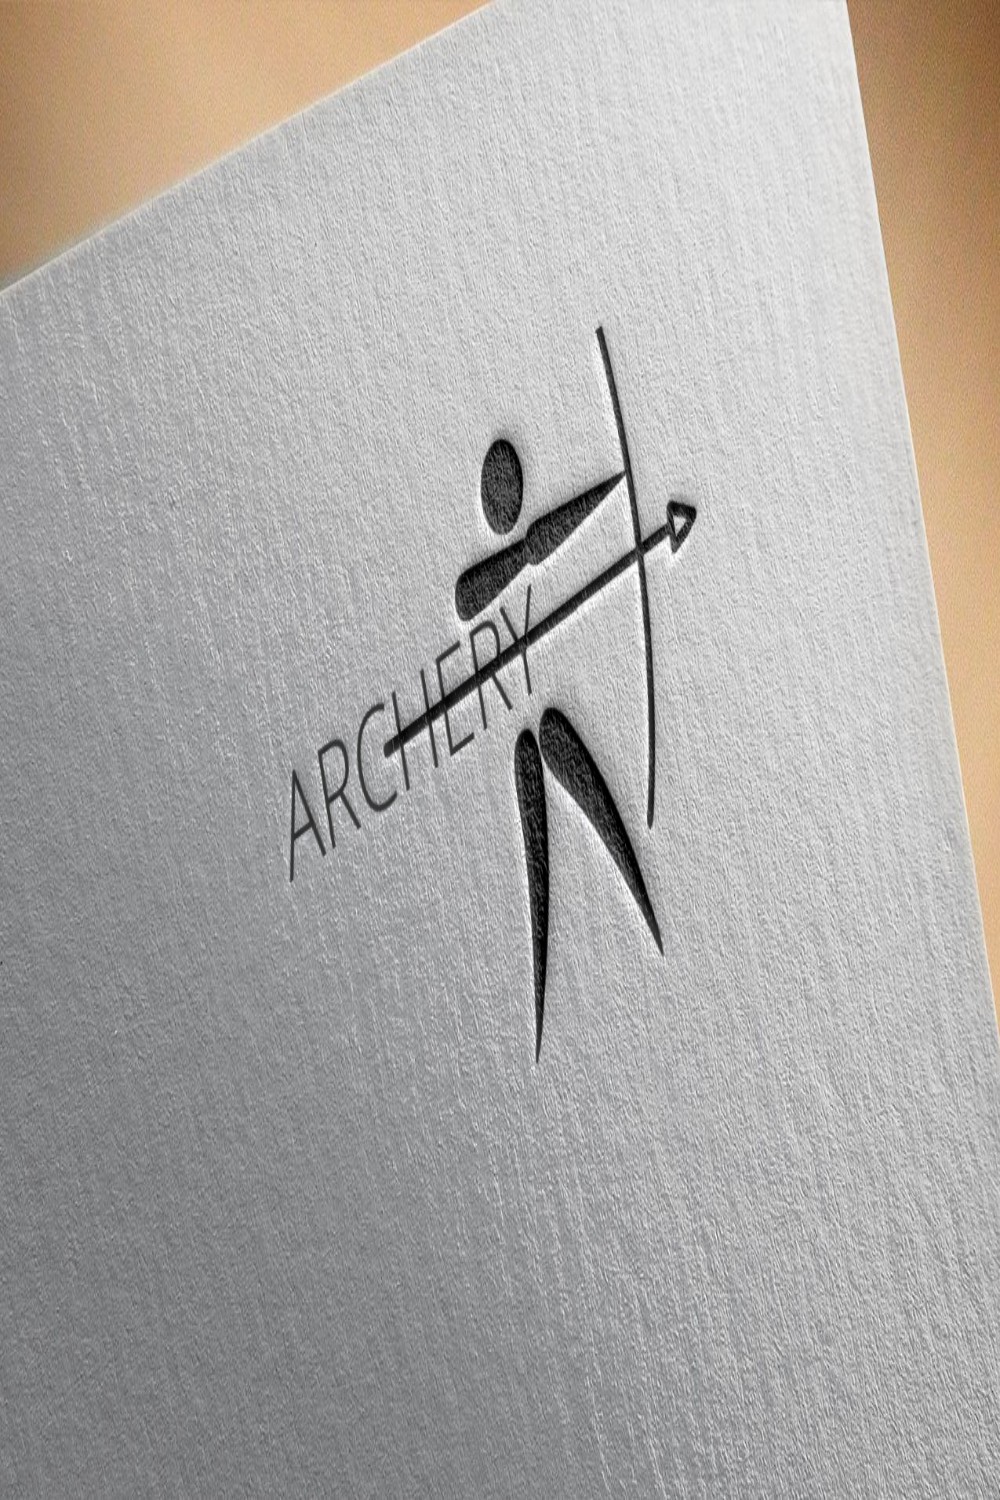 Archery Logo Design Pinterest image.